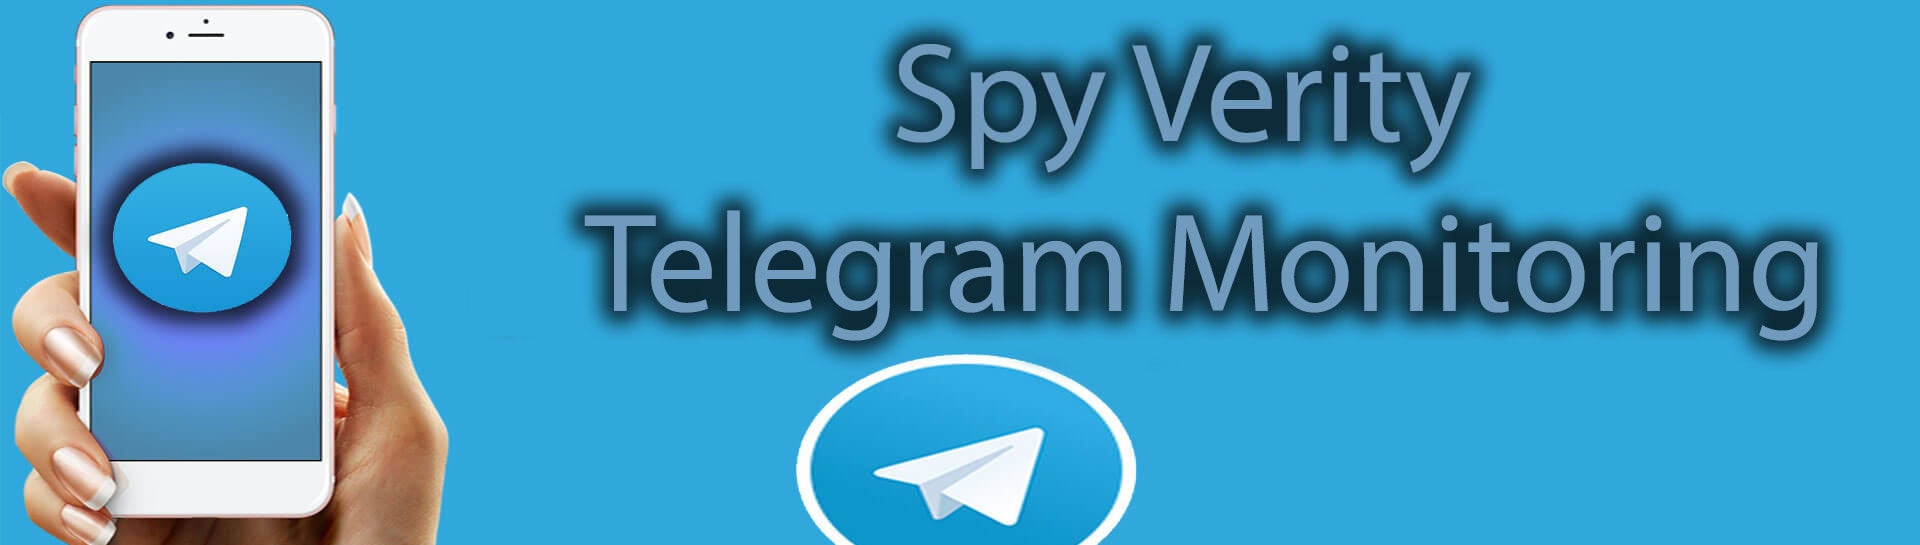 telegram spy